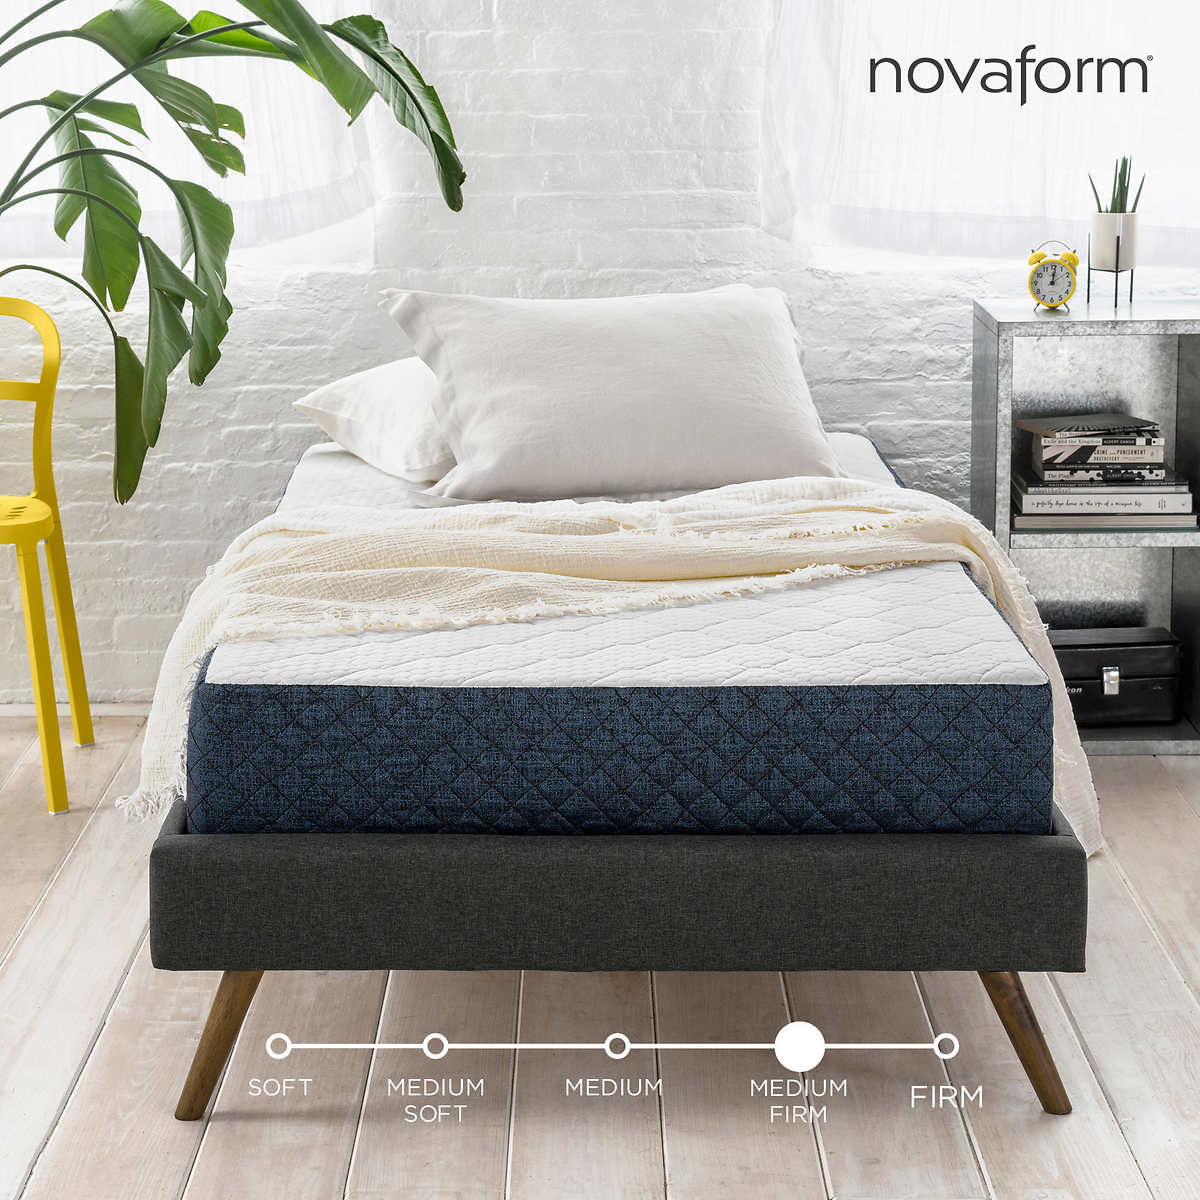 Novaform 8 Gel Memory Foam Mattress, Costco Bed In A Box Twin Xl